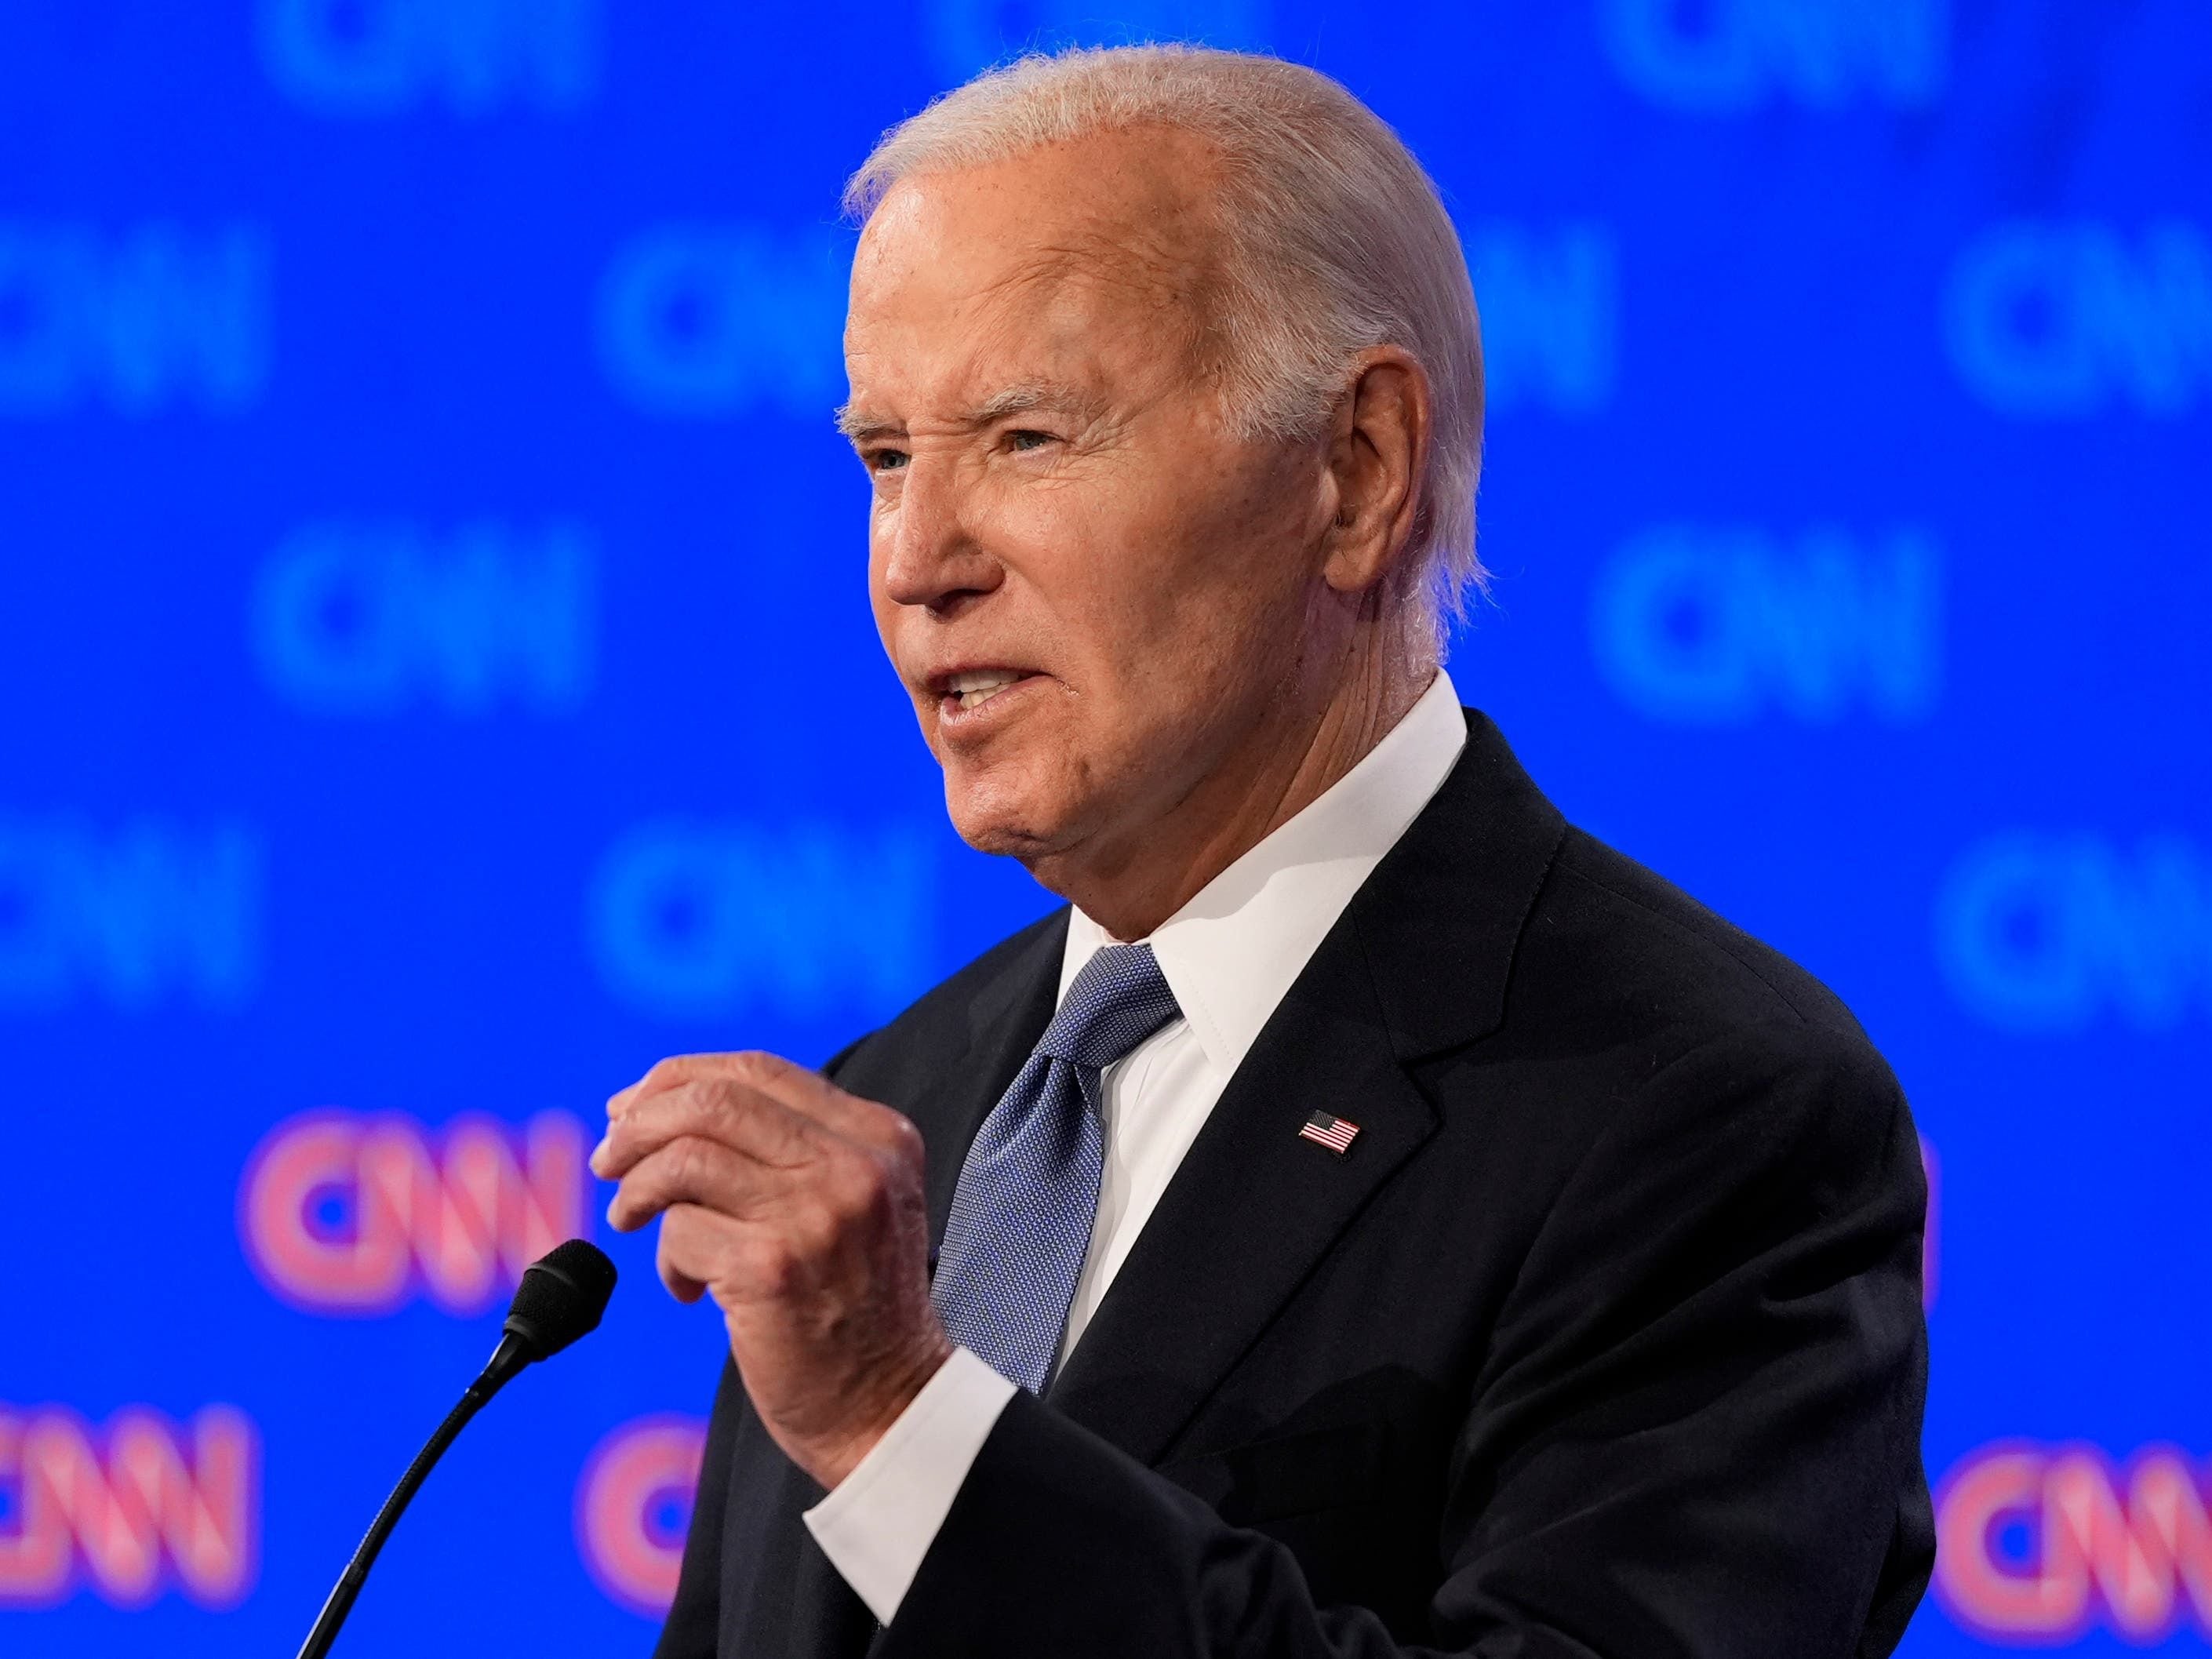 Biden’s halting debate performance stirs Democratic panic about his candidacy